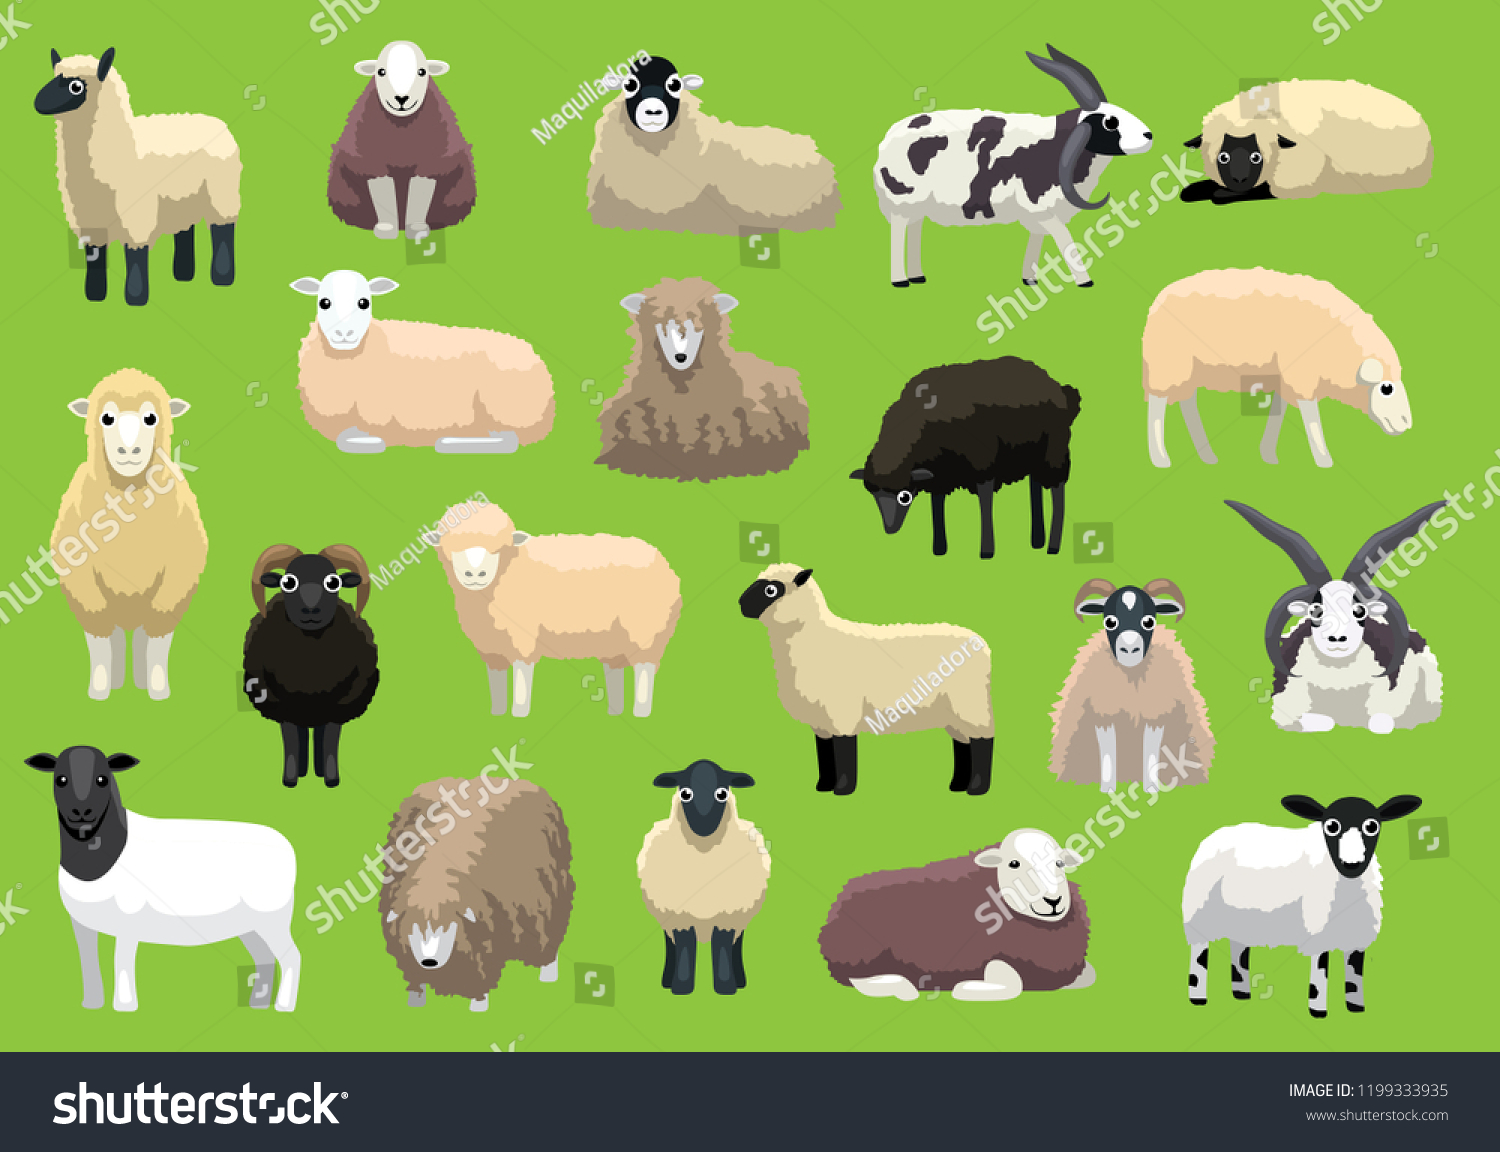 SVG of Various Sheep Breeds Poses Cartoon Vector Characters svg